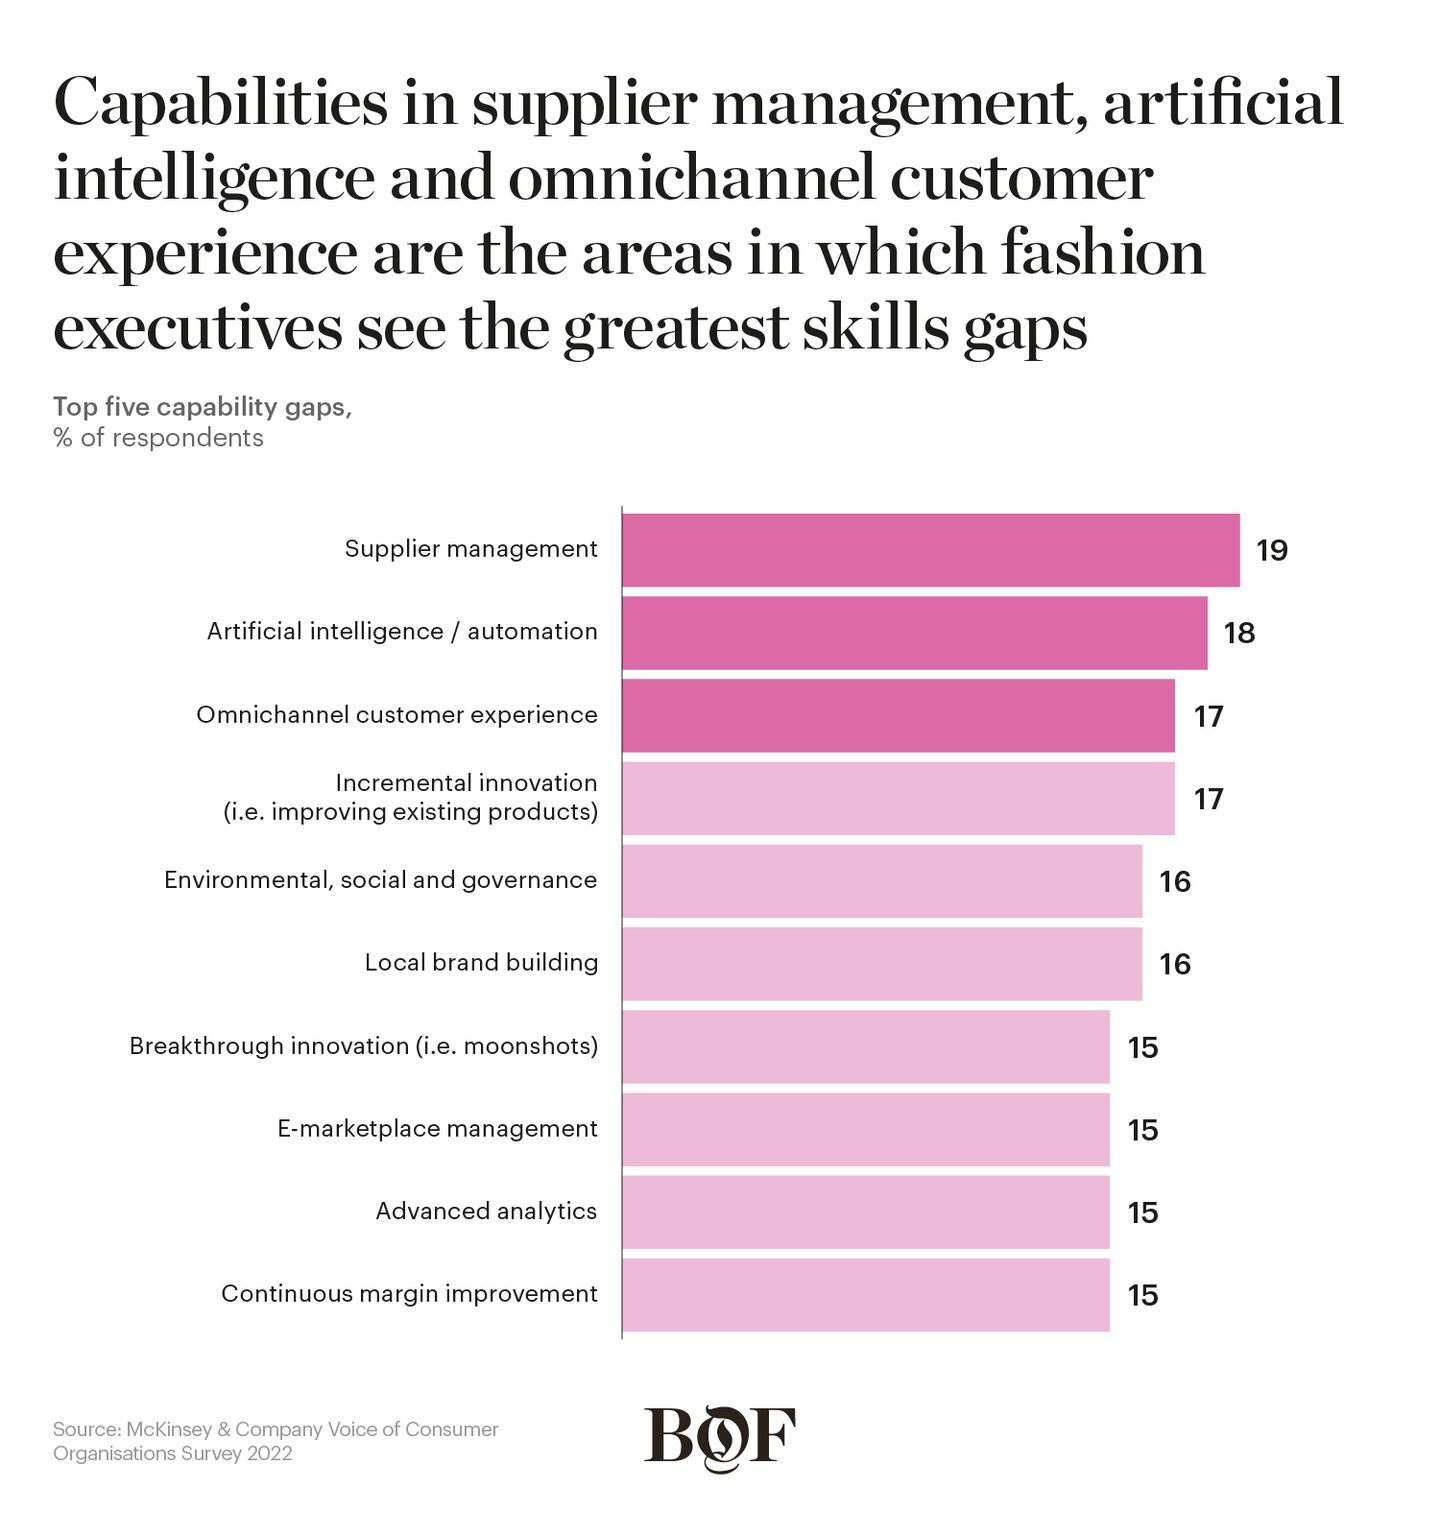 Top five capability gaps